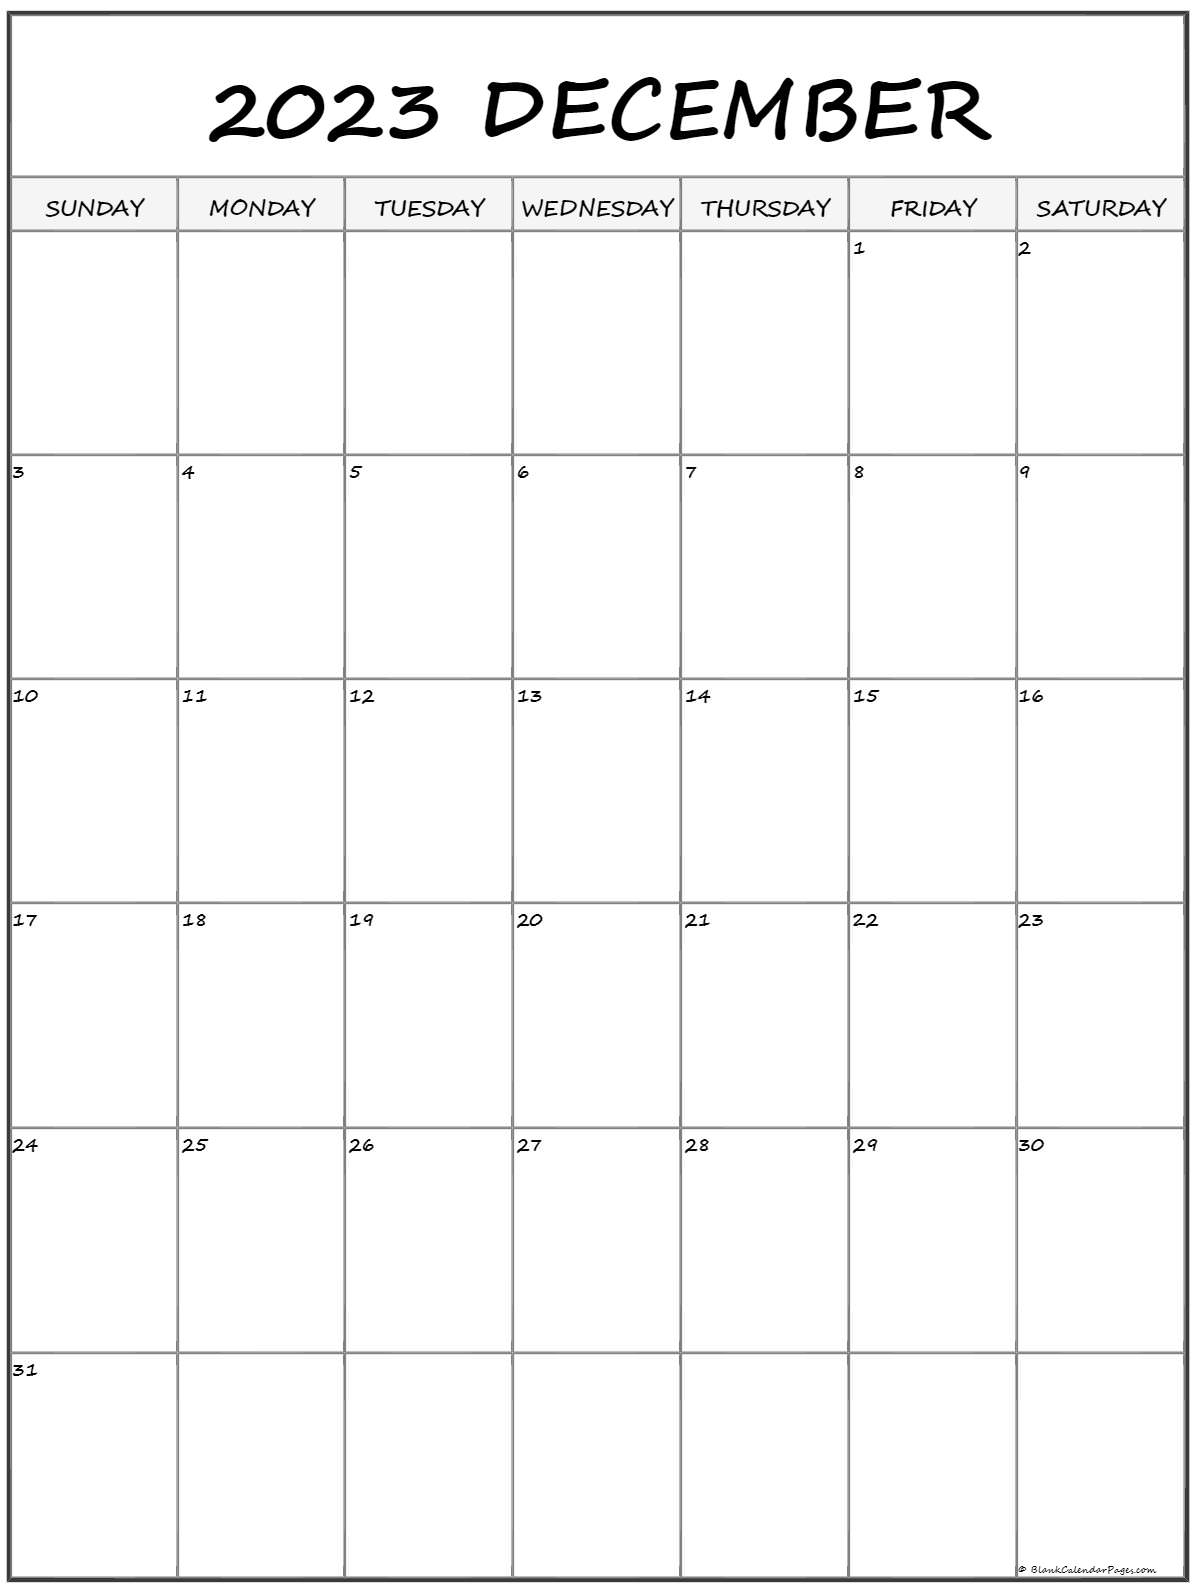 december-2023-calendar-free-printable-calendar-december-2023-calendar